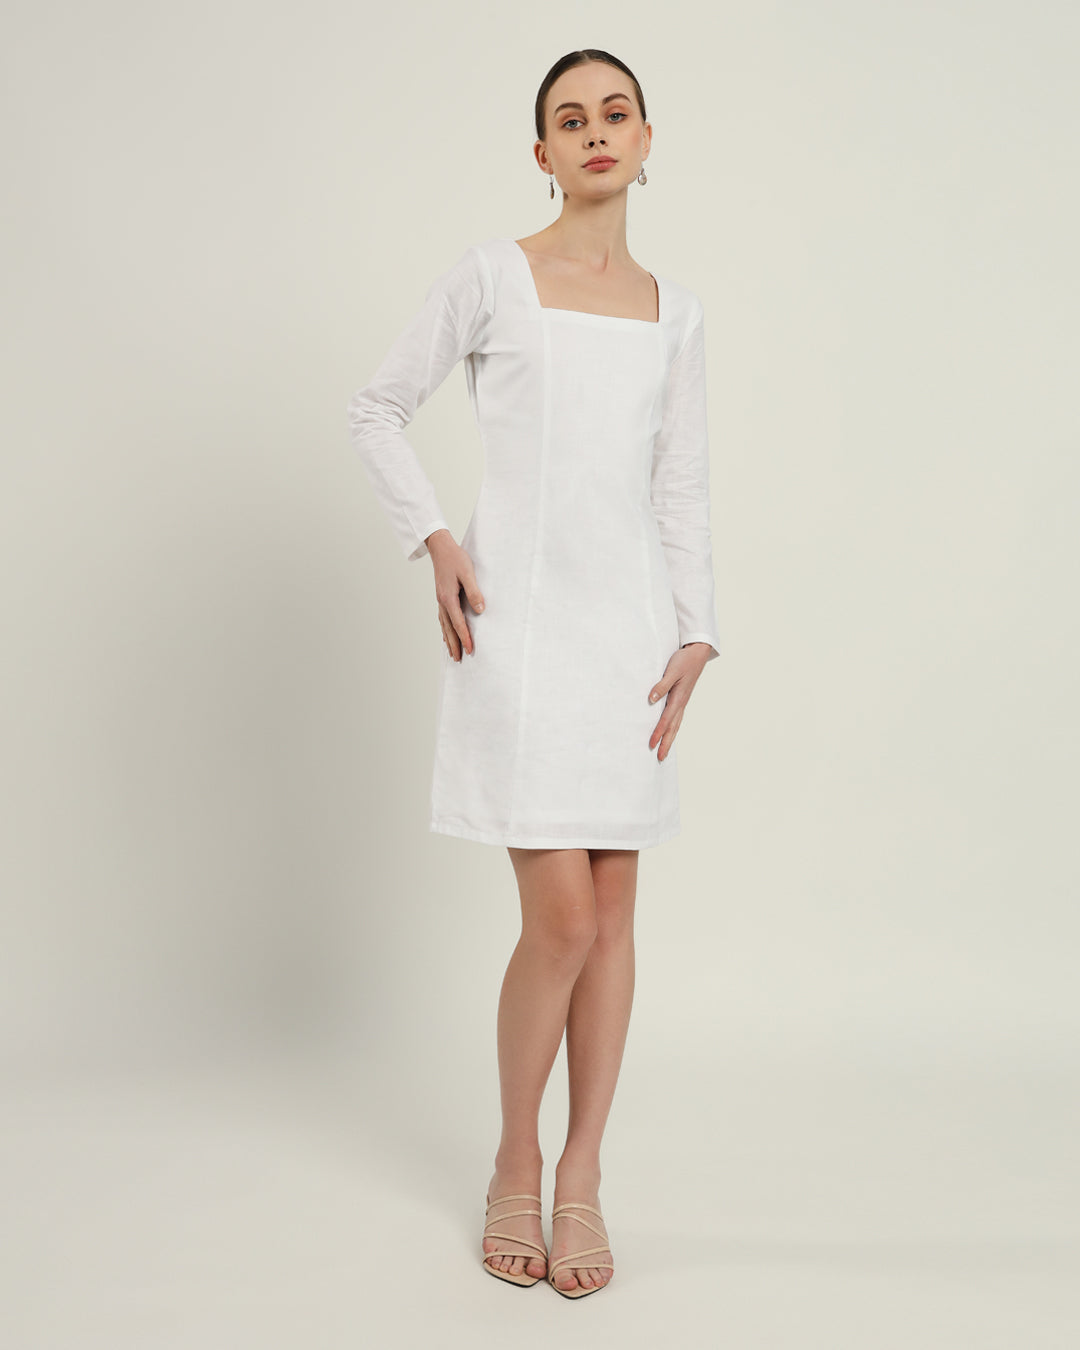 The Auburn Daisy White Linen Dress